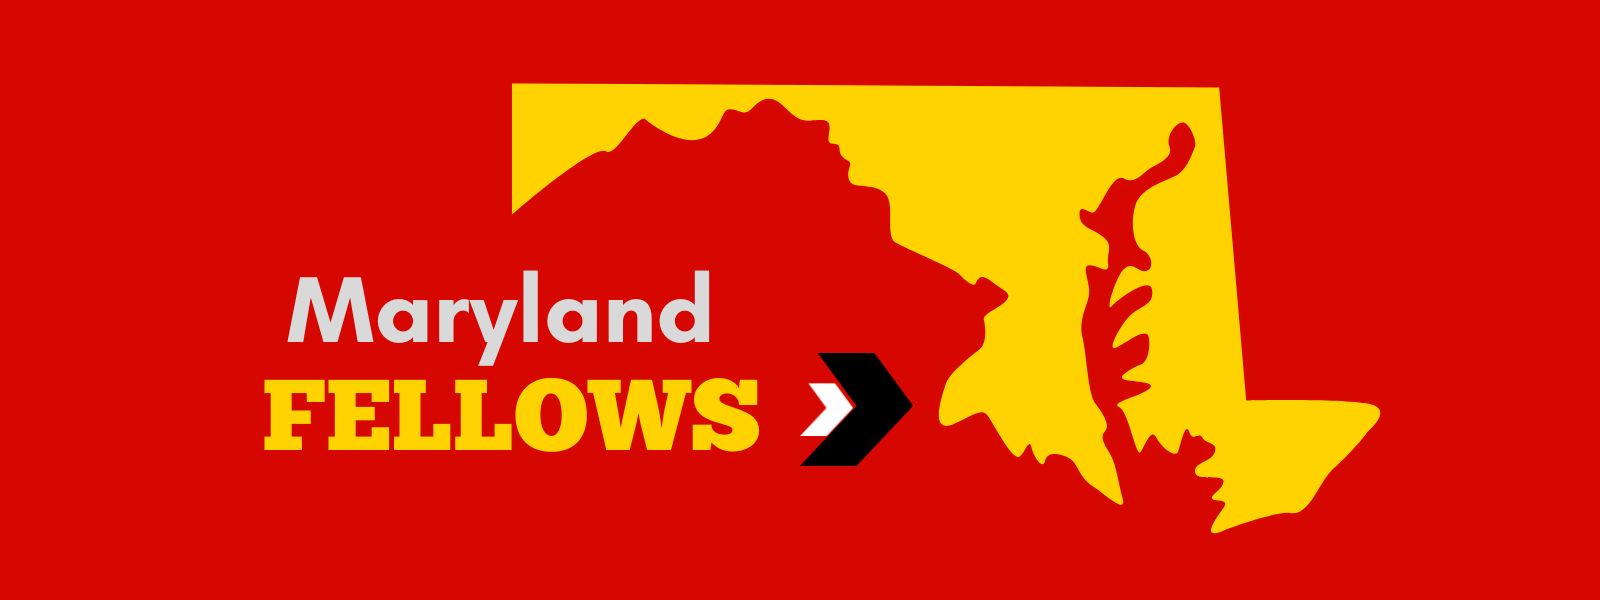 Maryland Fellows Globe Logo